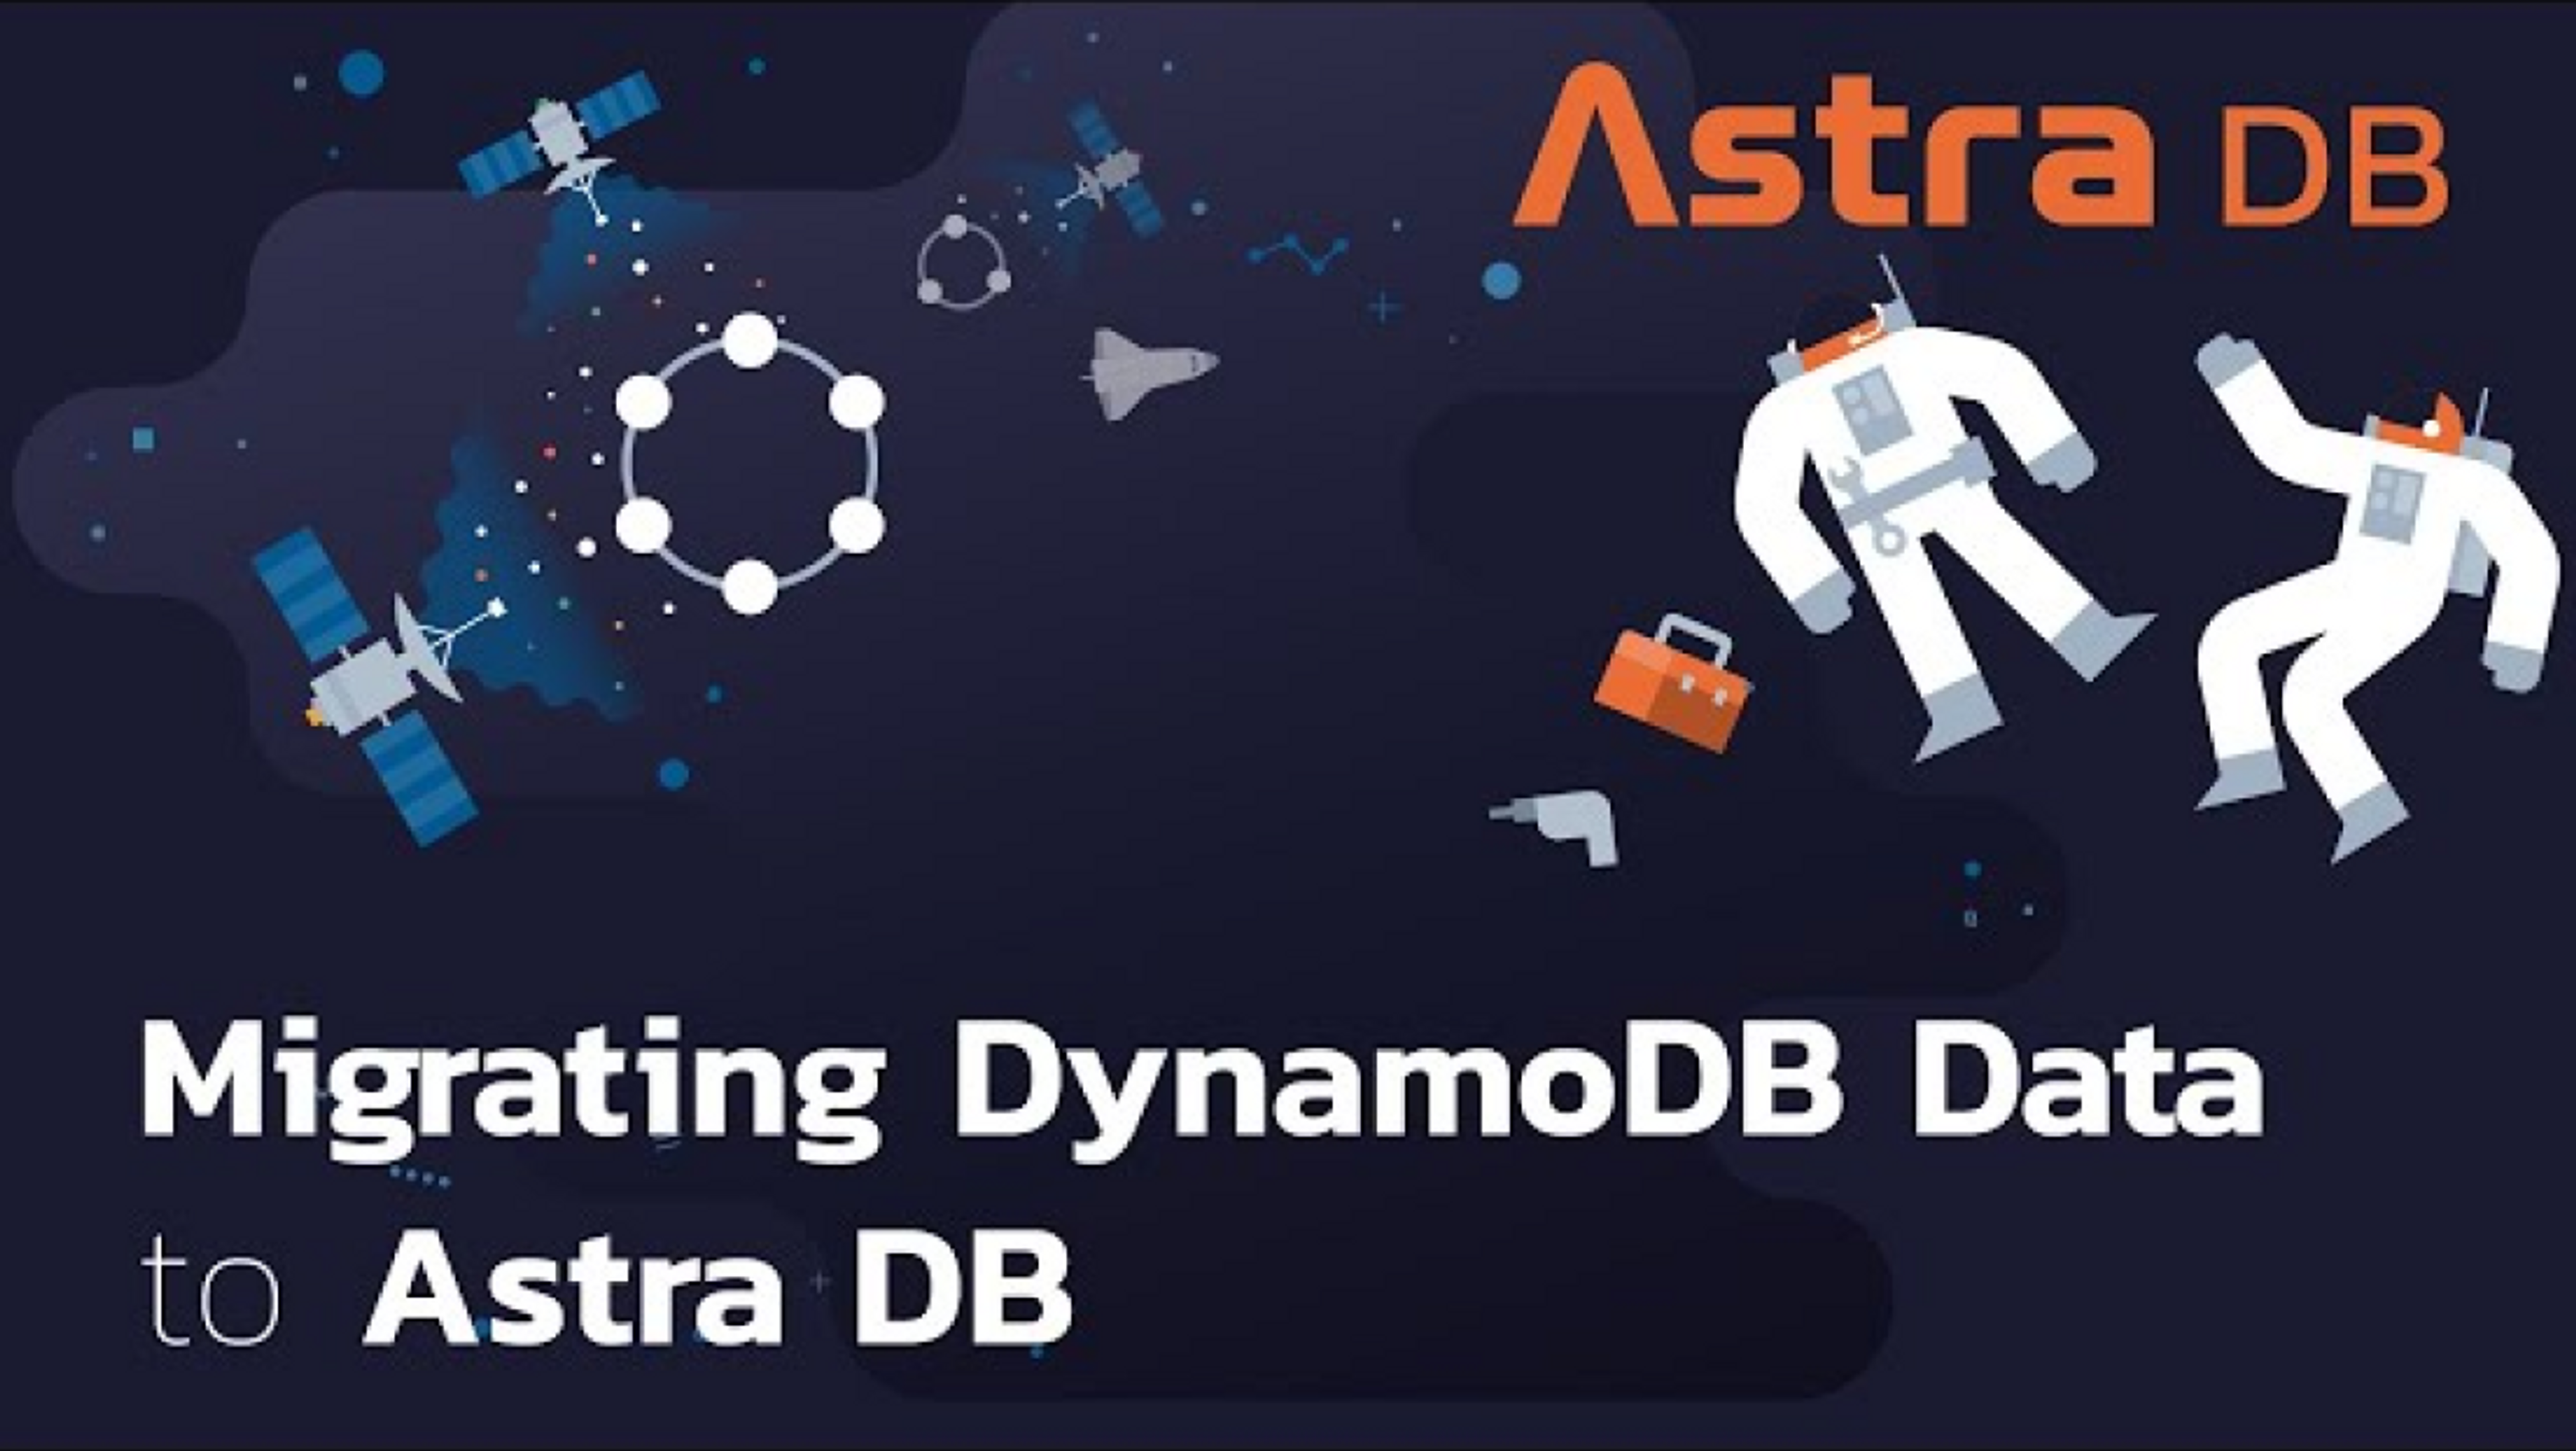 Migrating dynamodb data to astra db